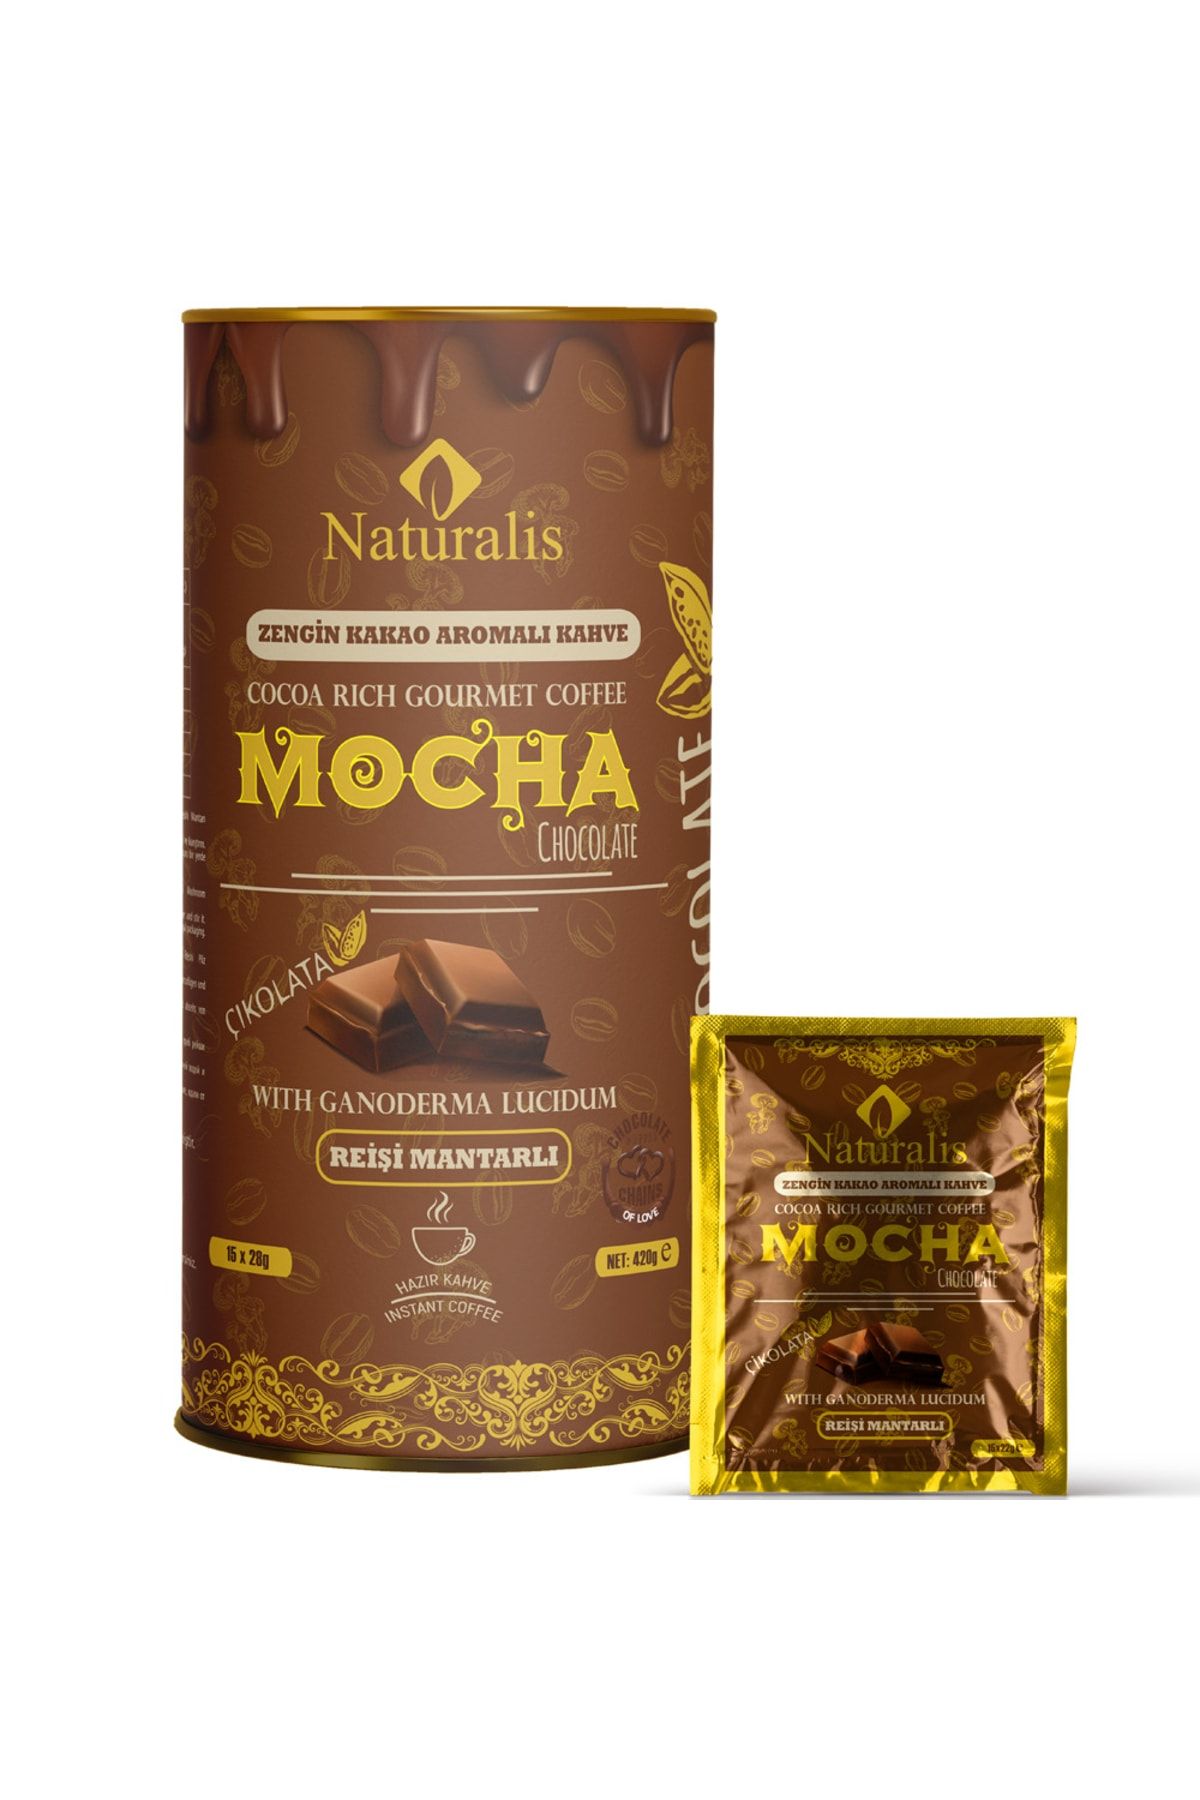 Naturalis Mocha Coffee